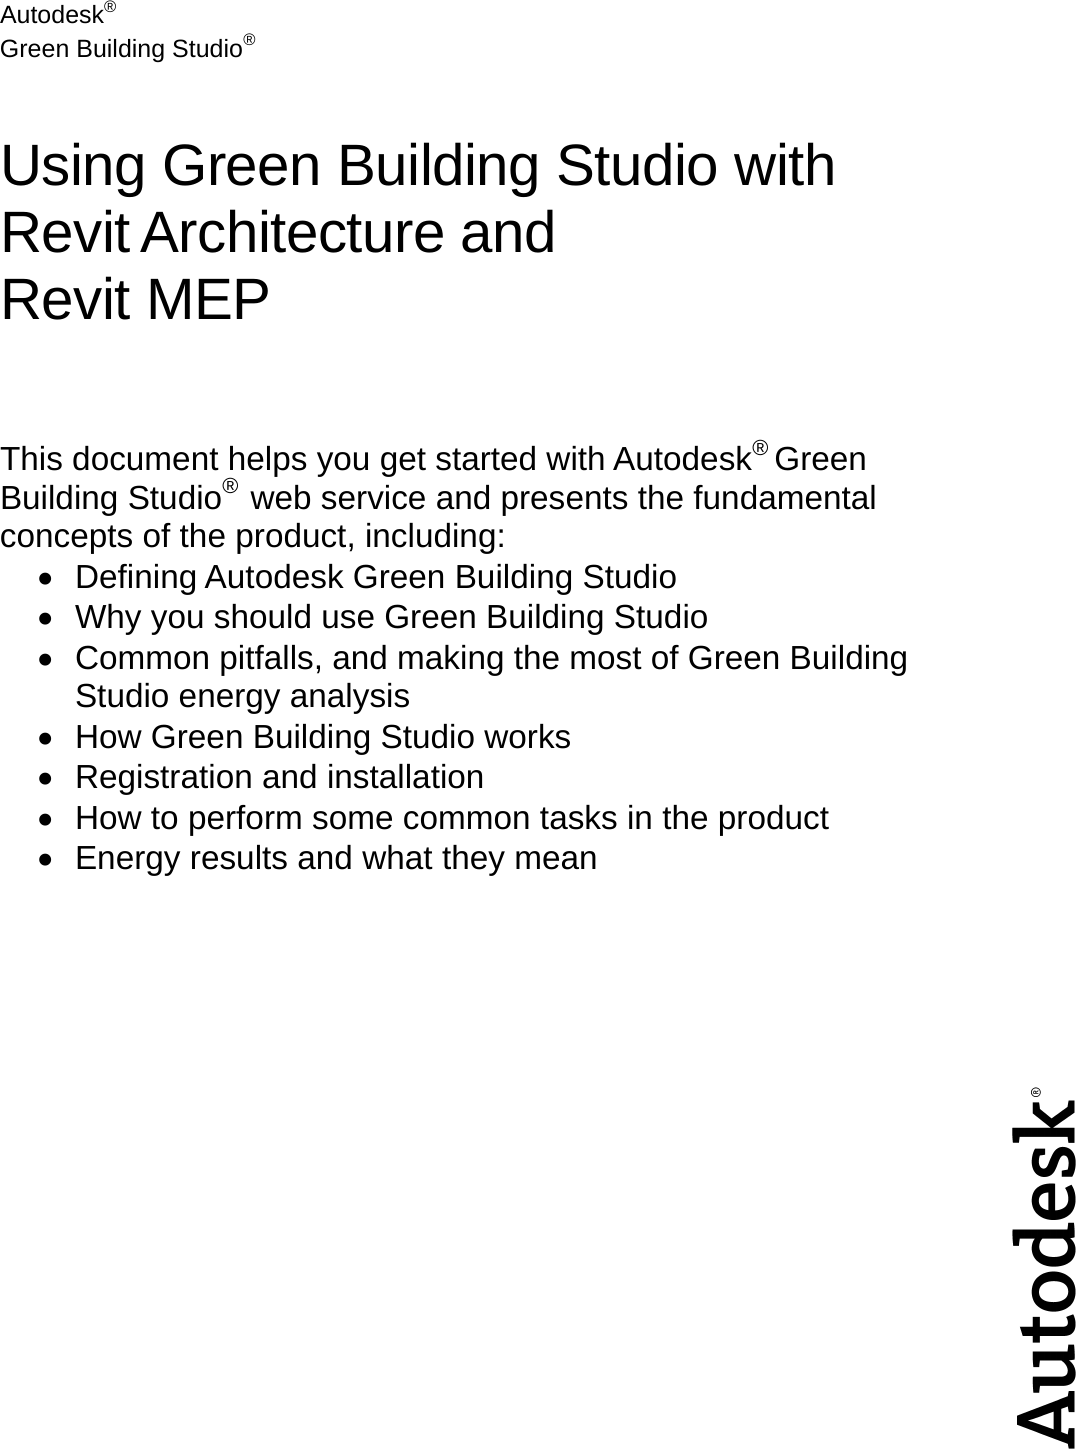 using-green-building-studio-with-revitx-greenbuild-revit